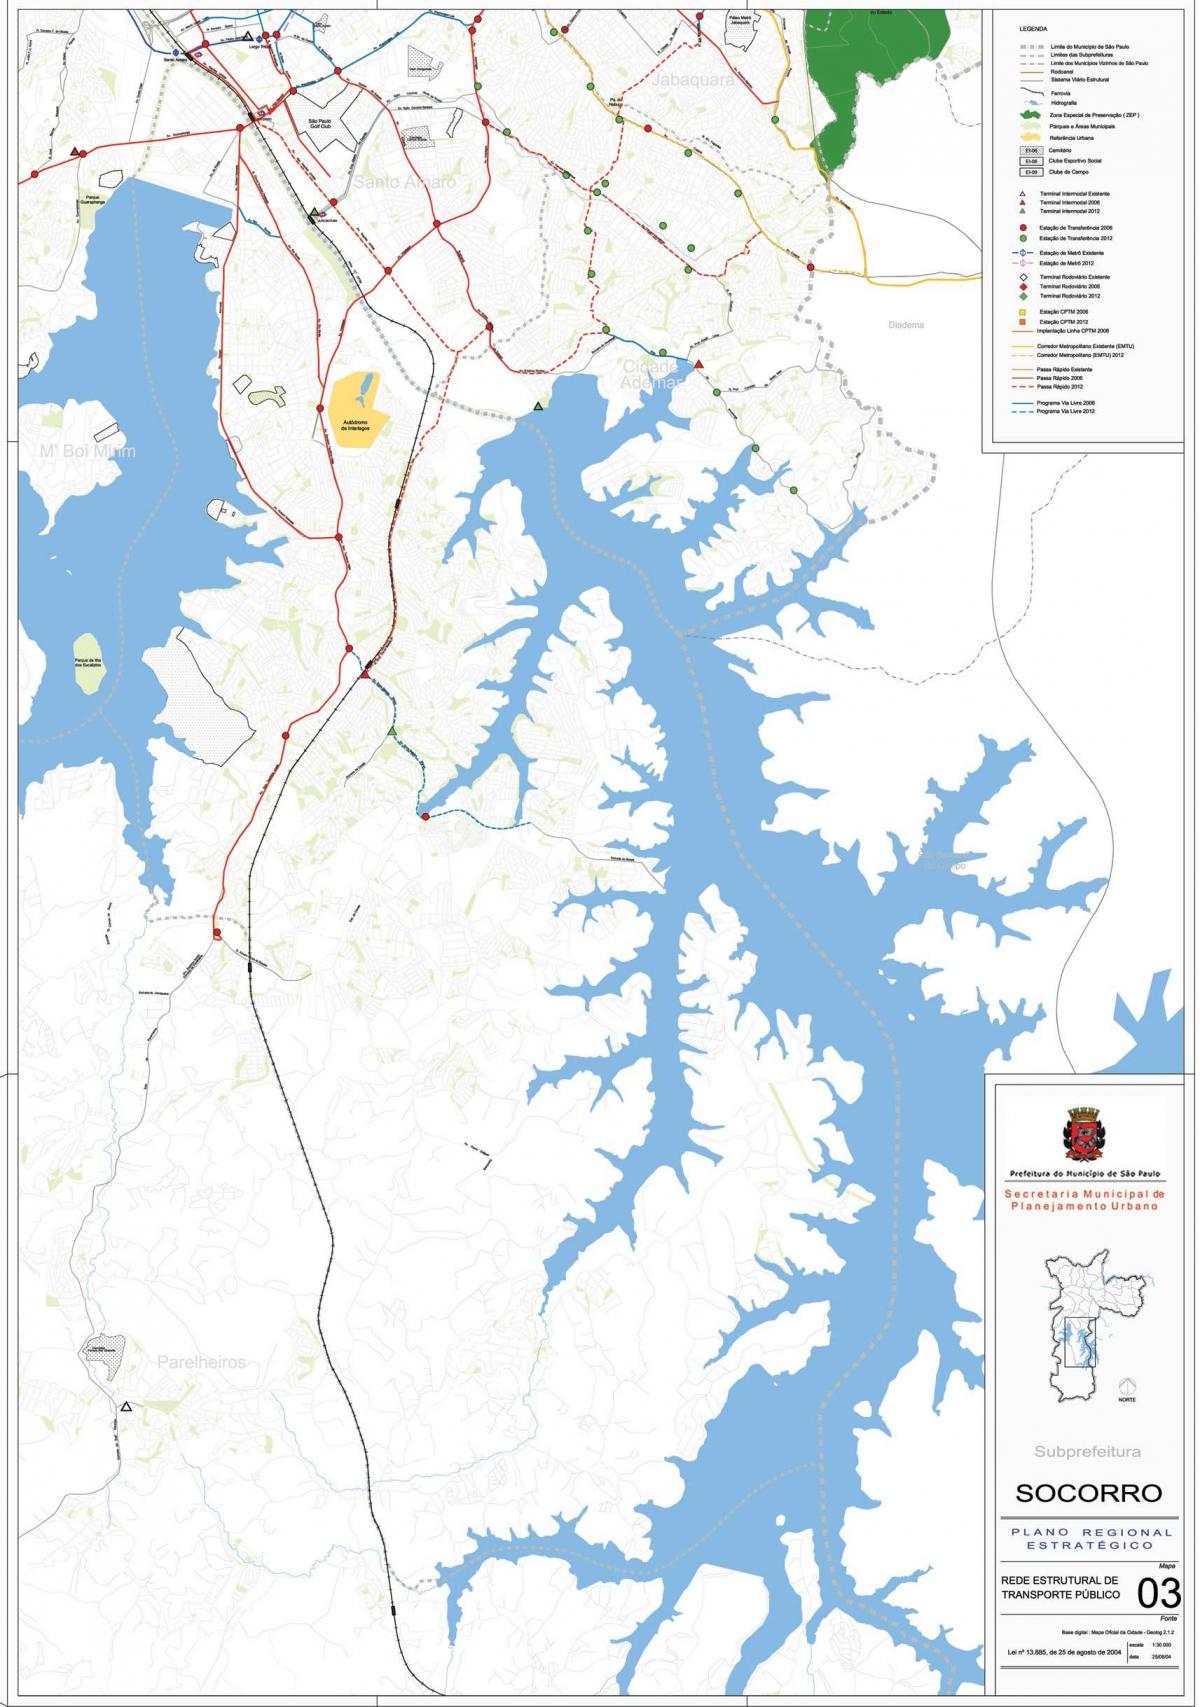 Mapa Capela dělat Socorro São Paulo - Silnice